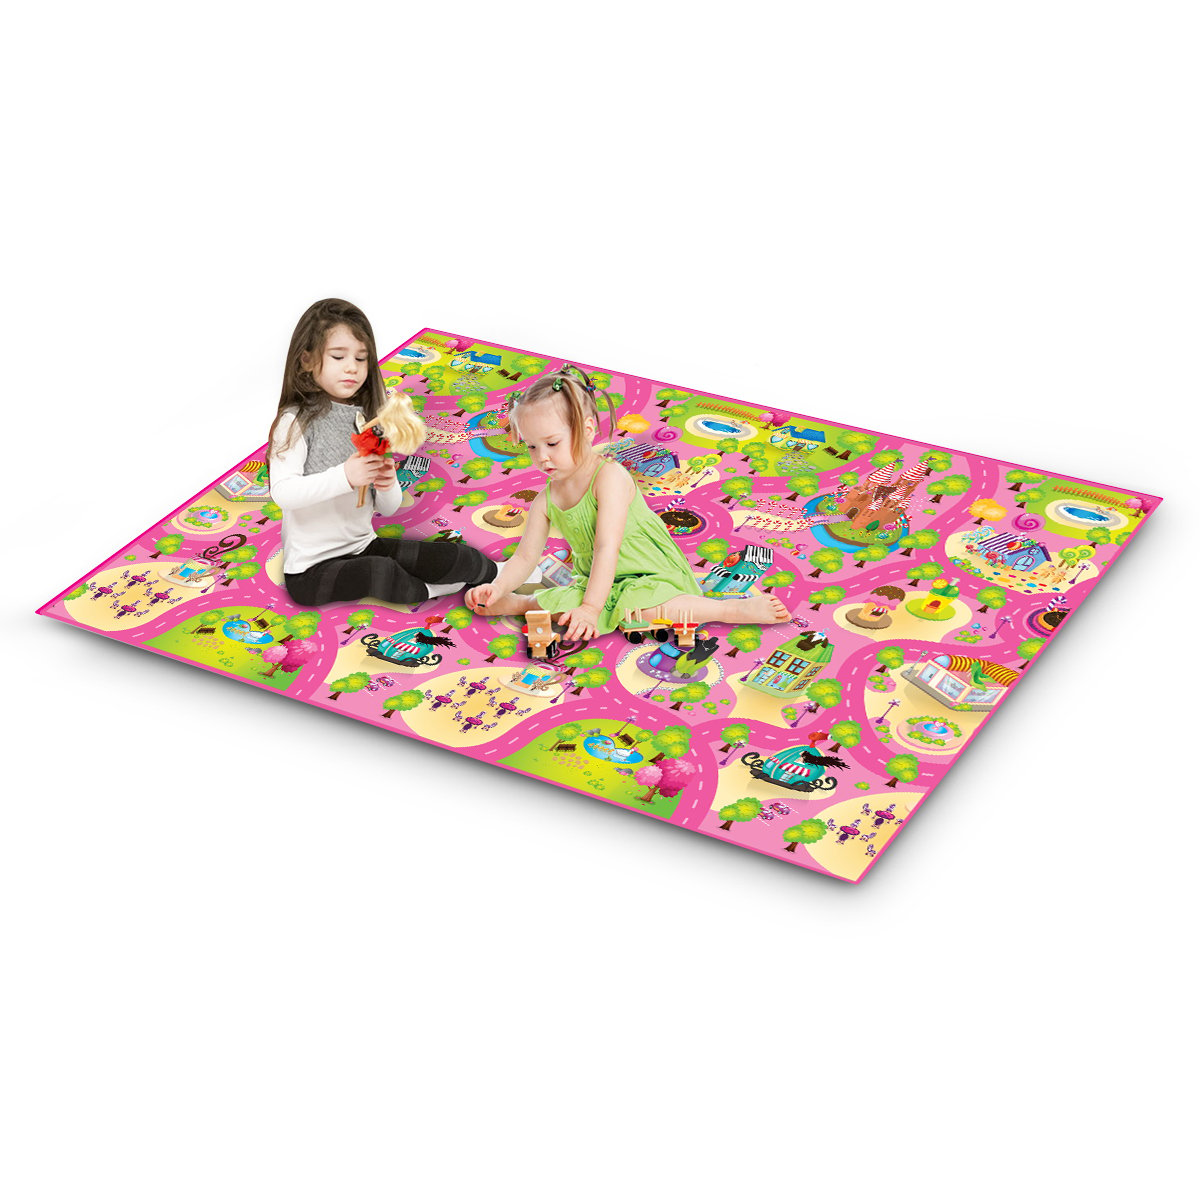 Rollmatz Candyland Baby Kids Play Floor Mat 200cm x 120cm 2